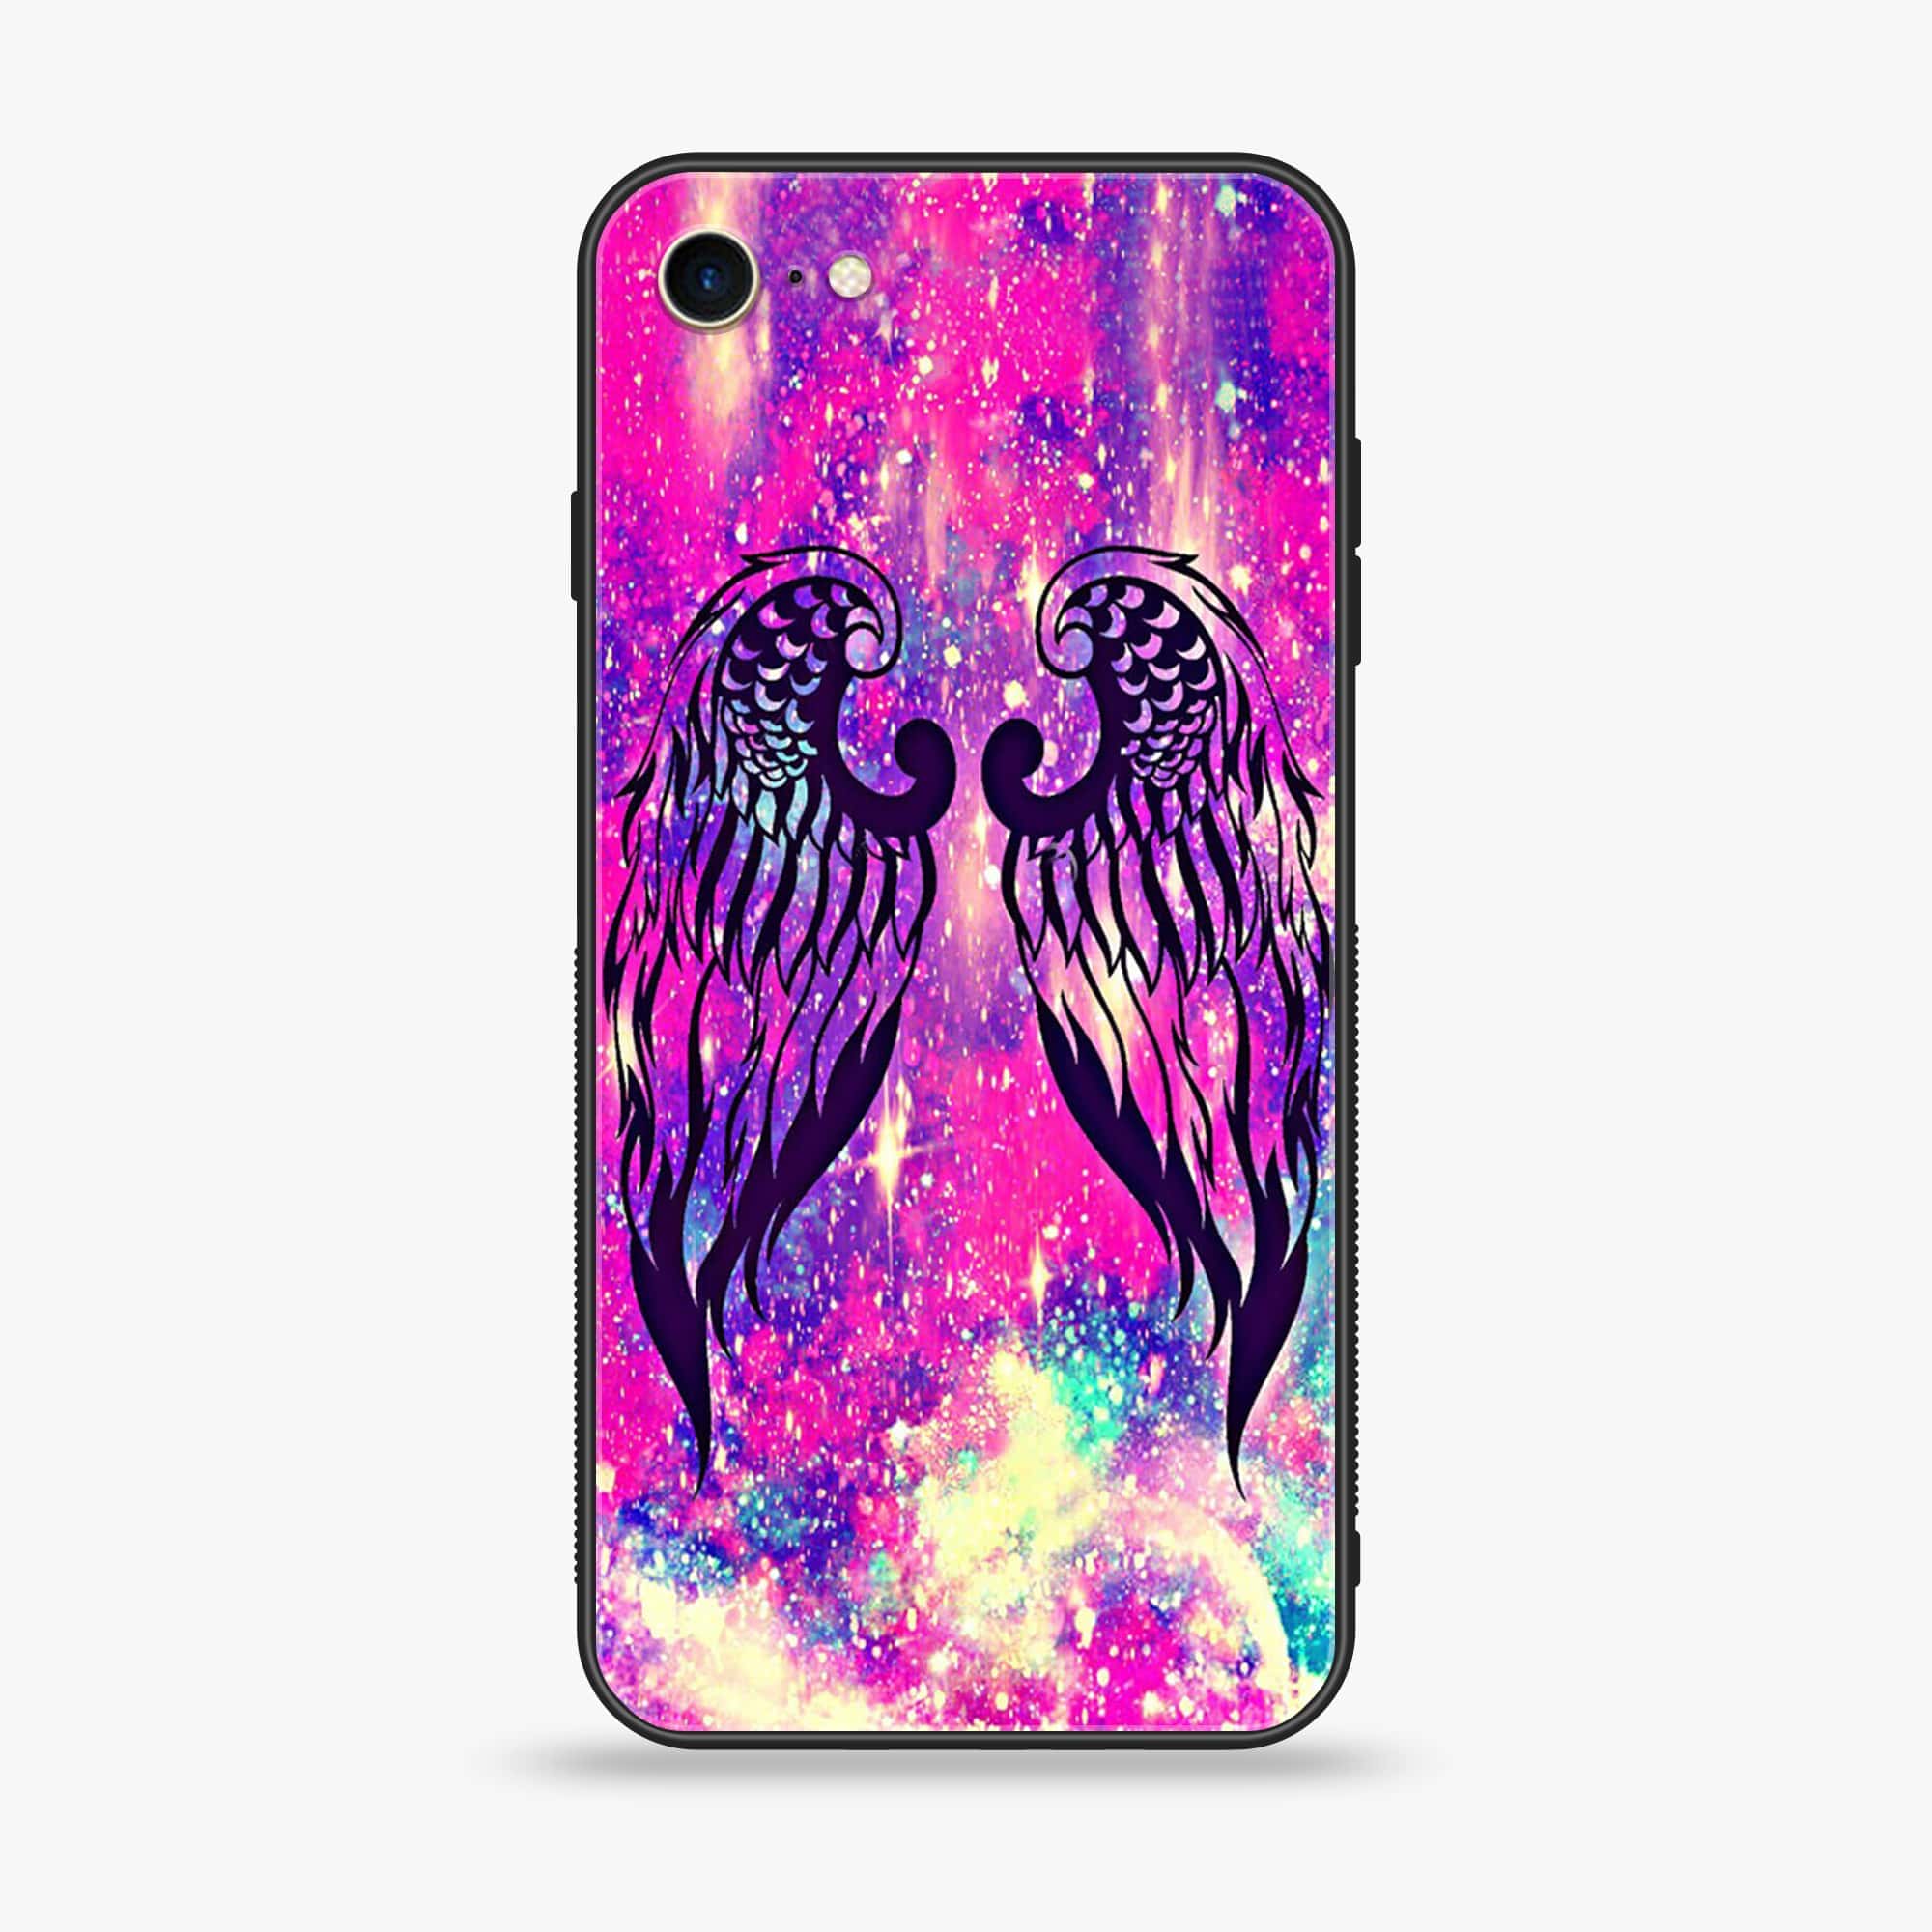 iPhone 6Plus - Angel Wings Series - Premium Printed Glass soft Bumper shock Proof Case